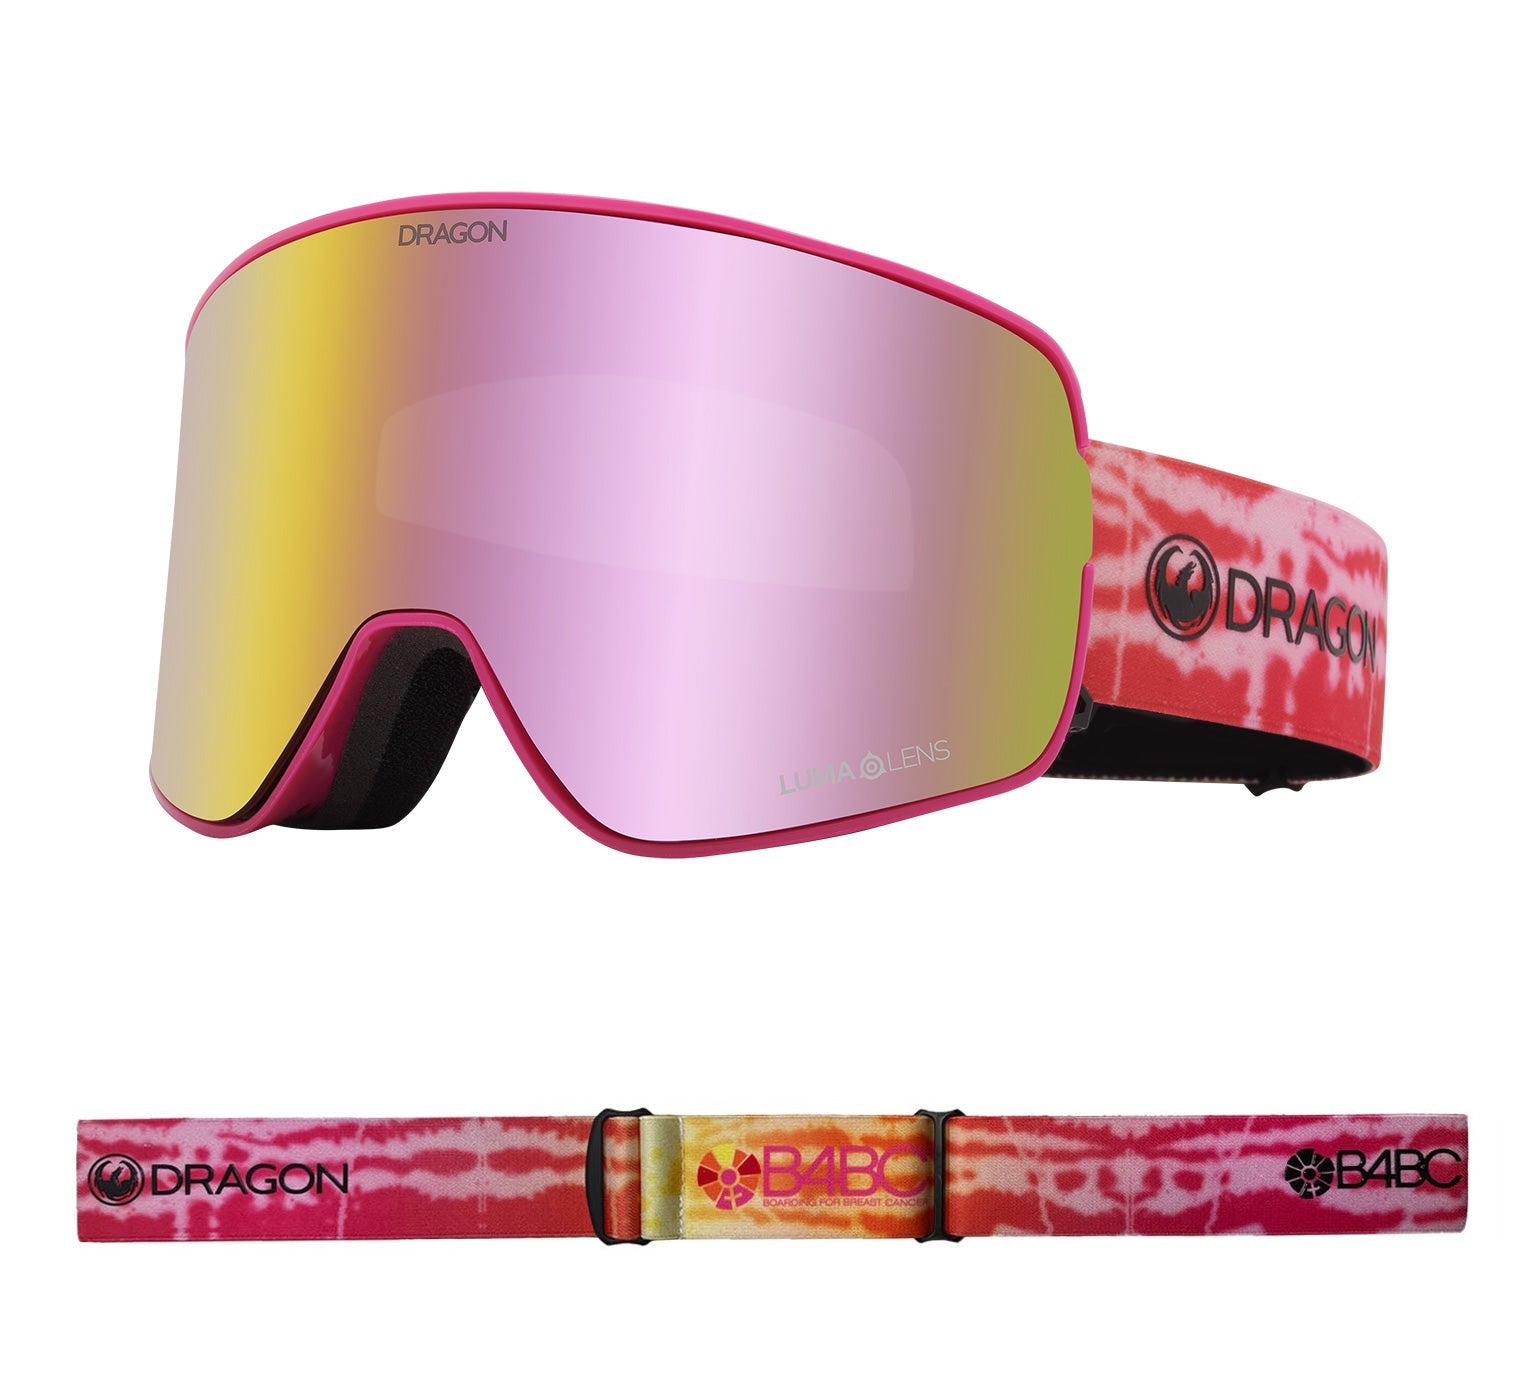 NFX2 - B4BC Collab with Lumalens Pink Ionized & Lumalens Dark Smoke Lens